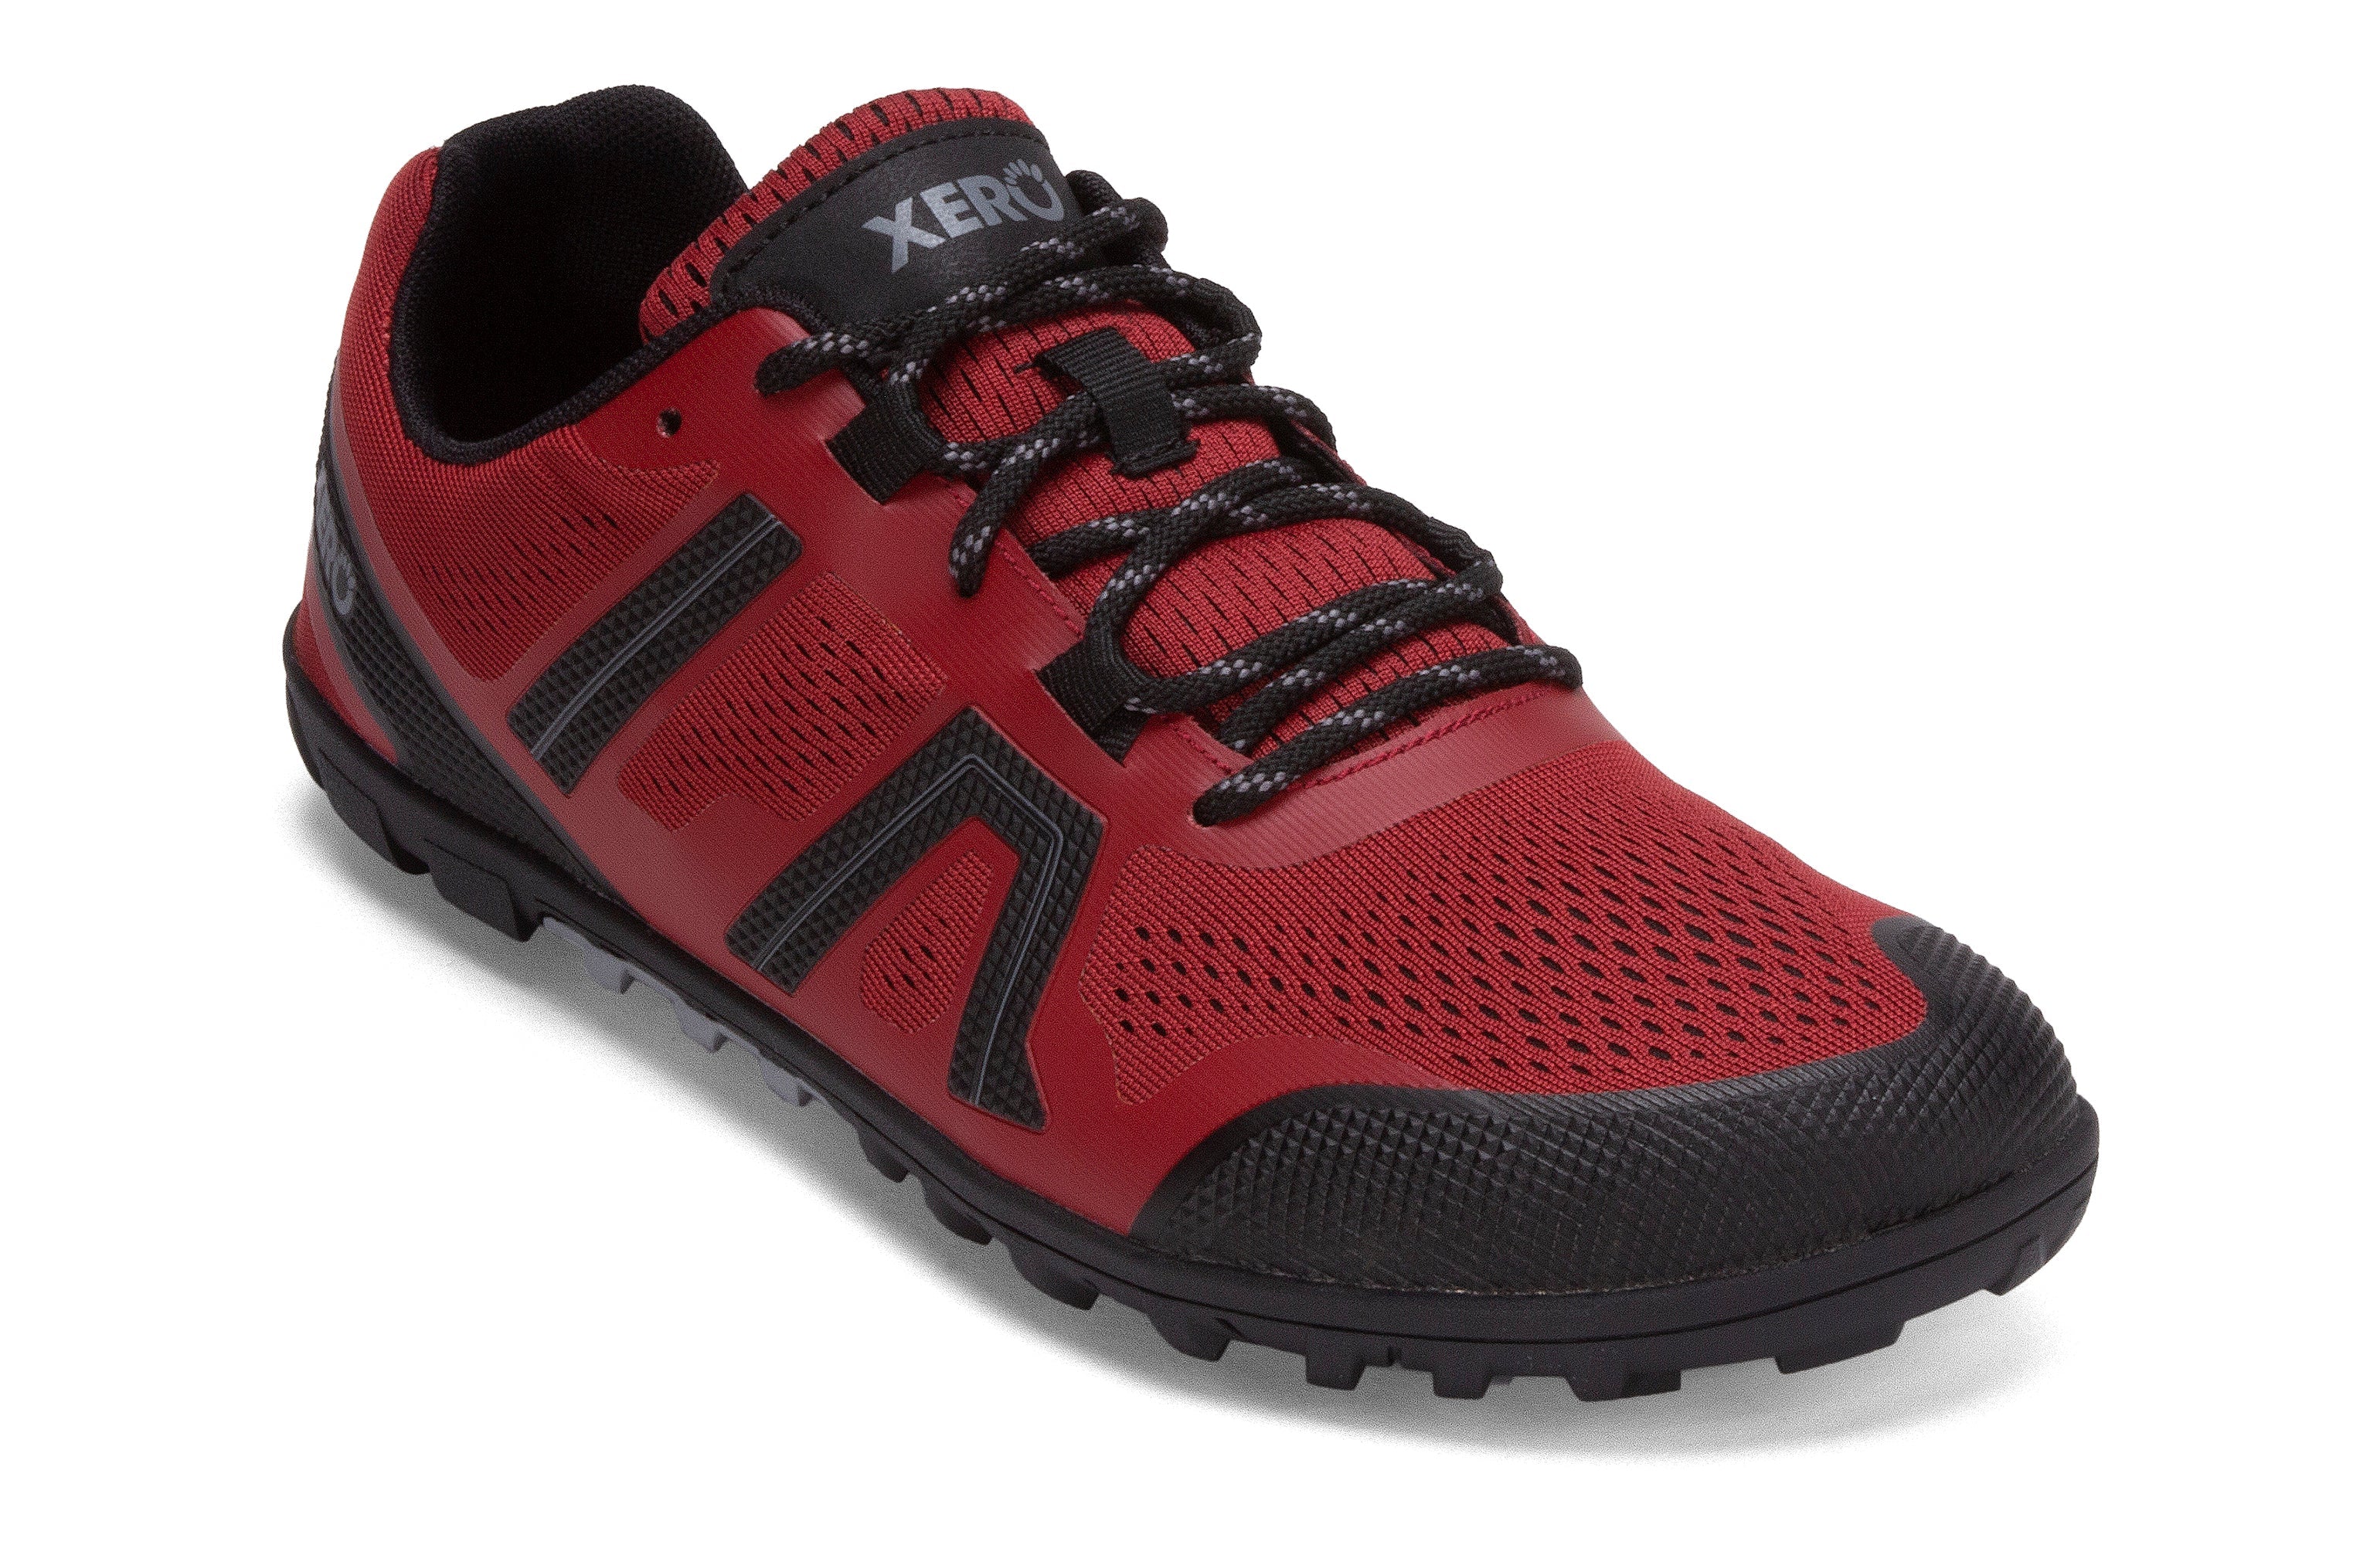 Xero Shoes Mesa Trail II Mens barfods vandresko til mænd i farven moab red, vinklet